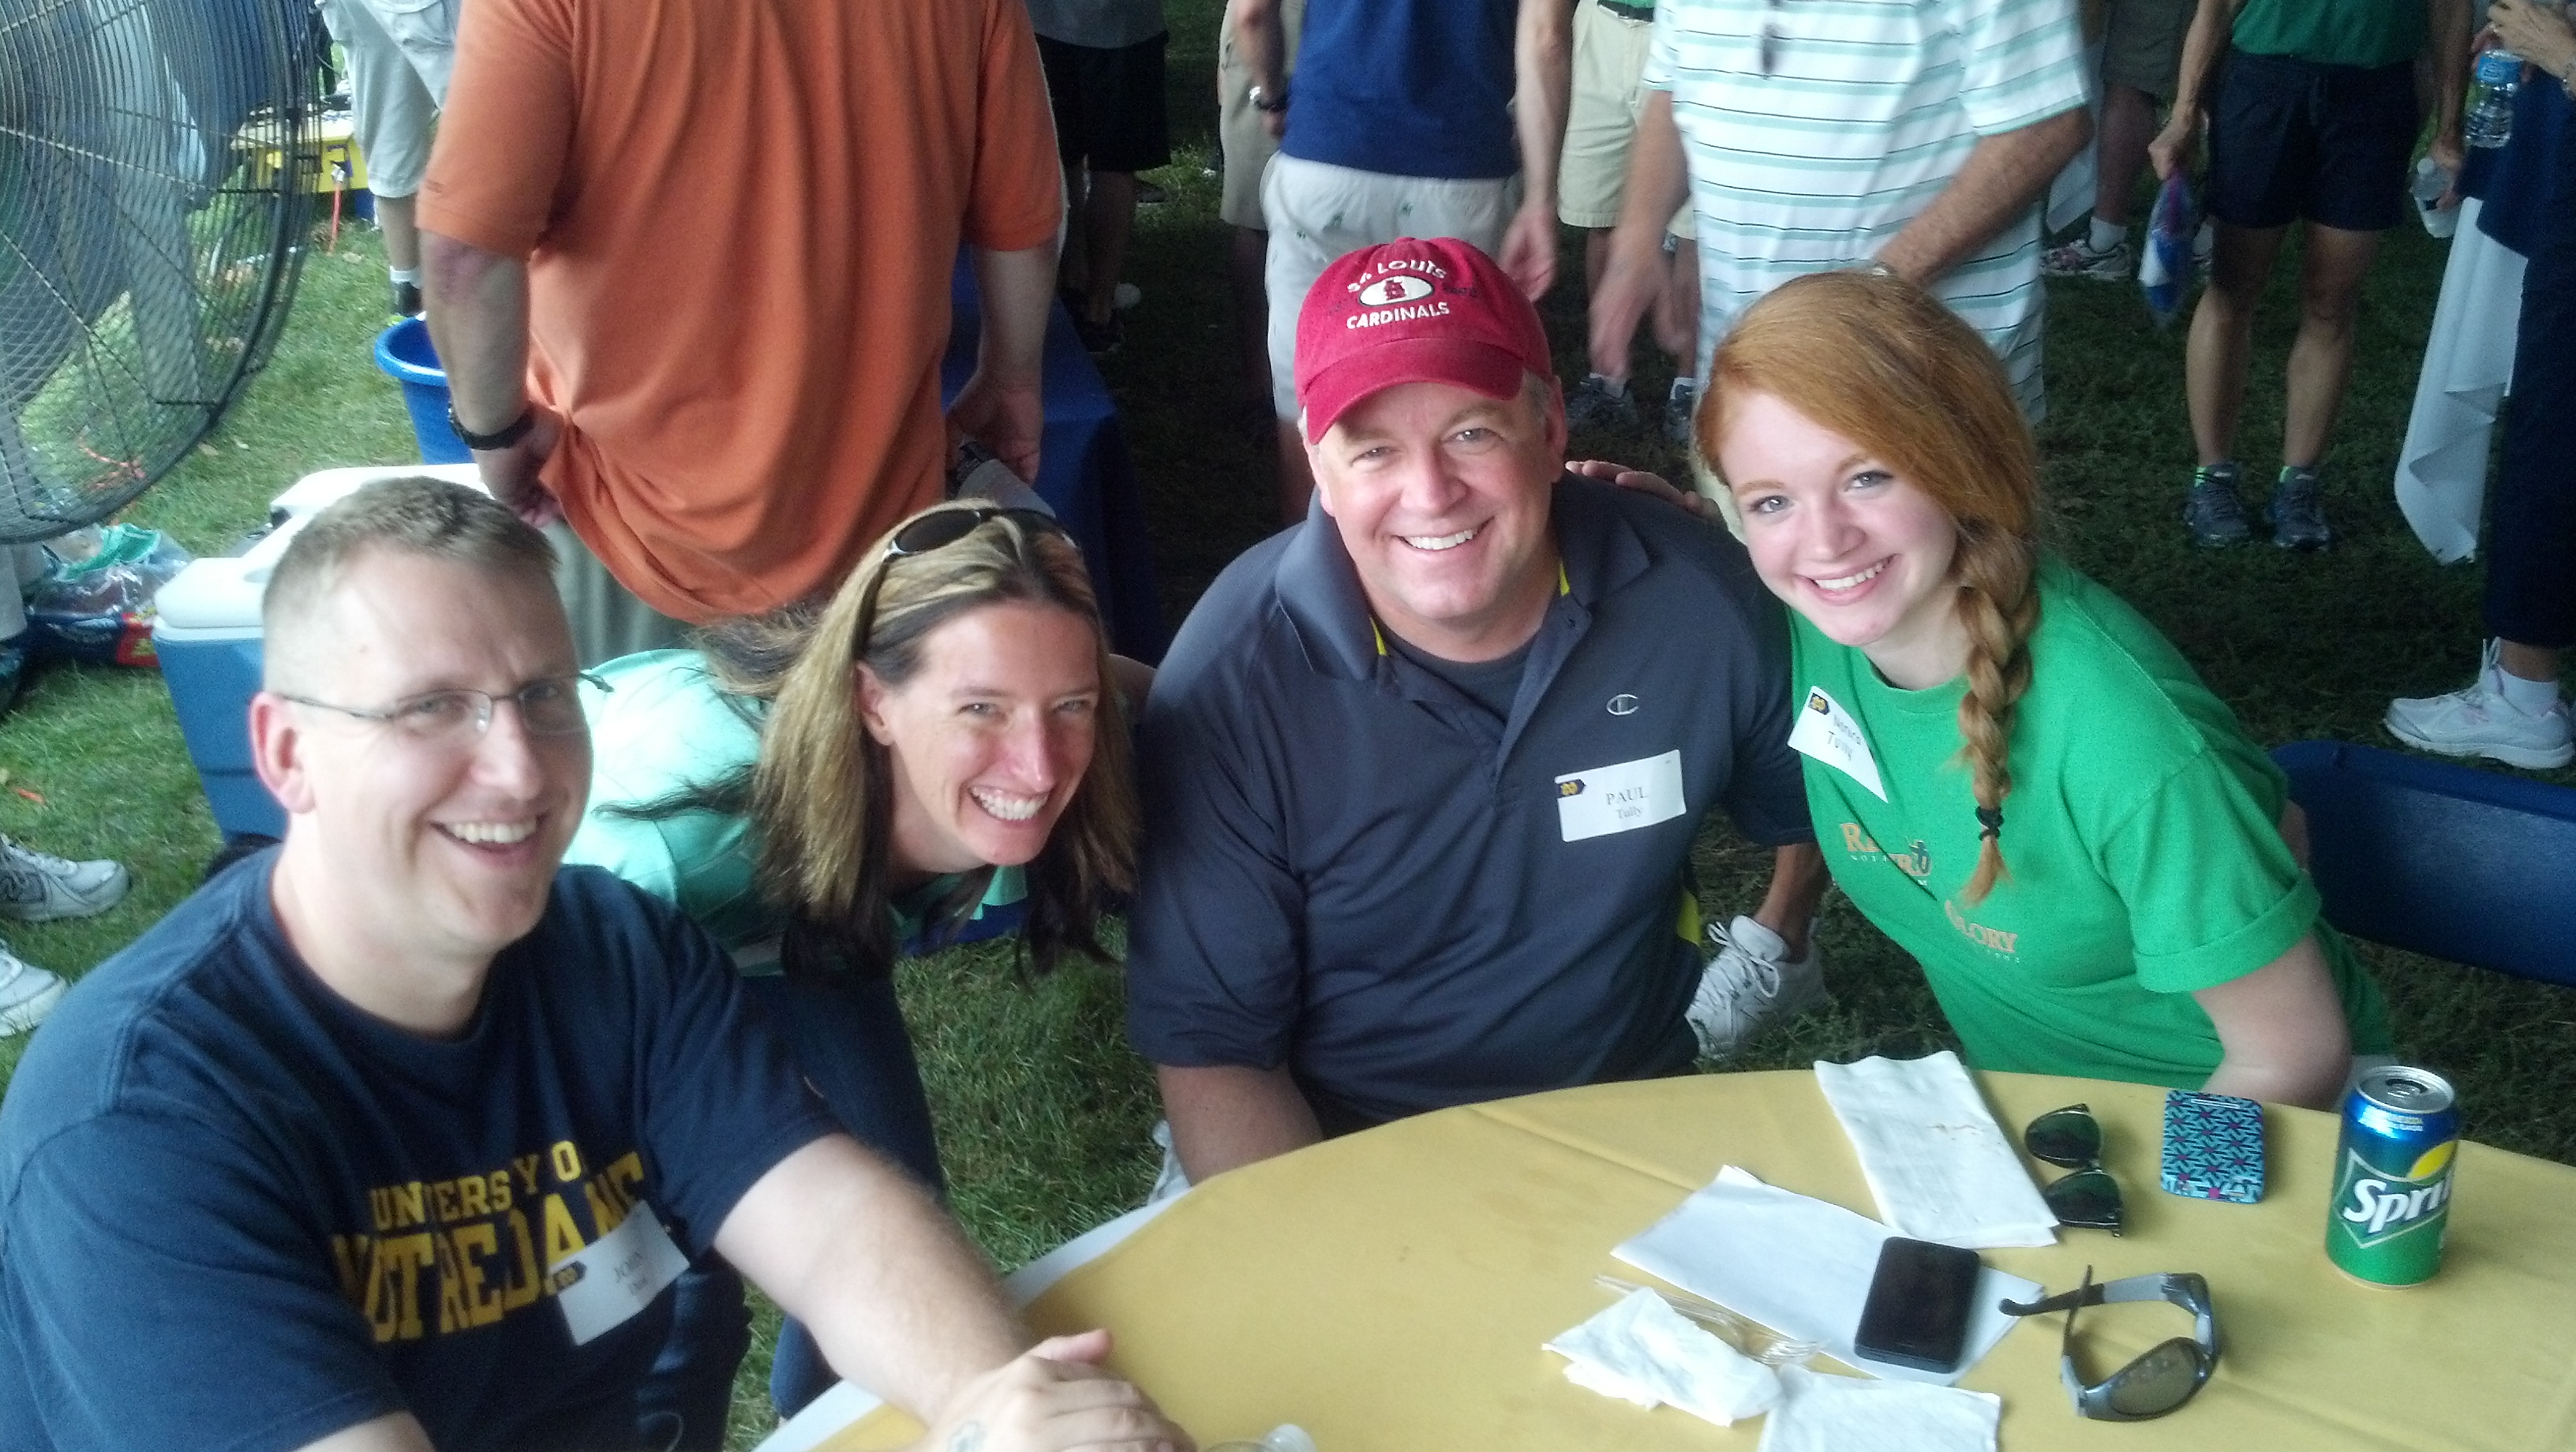 Karen's husband, Karen, Paul Tully, and his daughter - Go Irish!